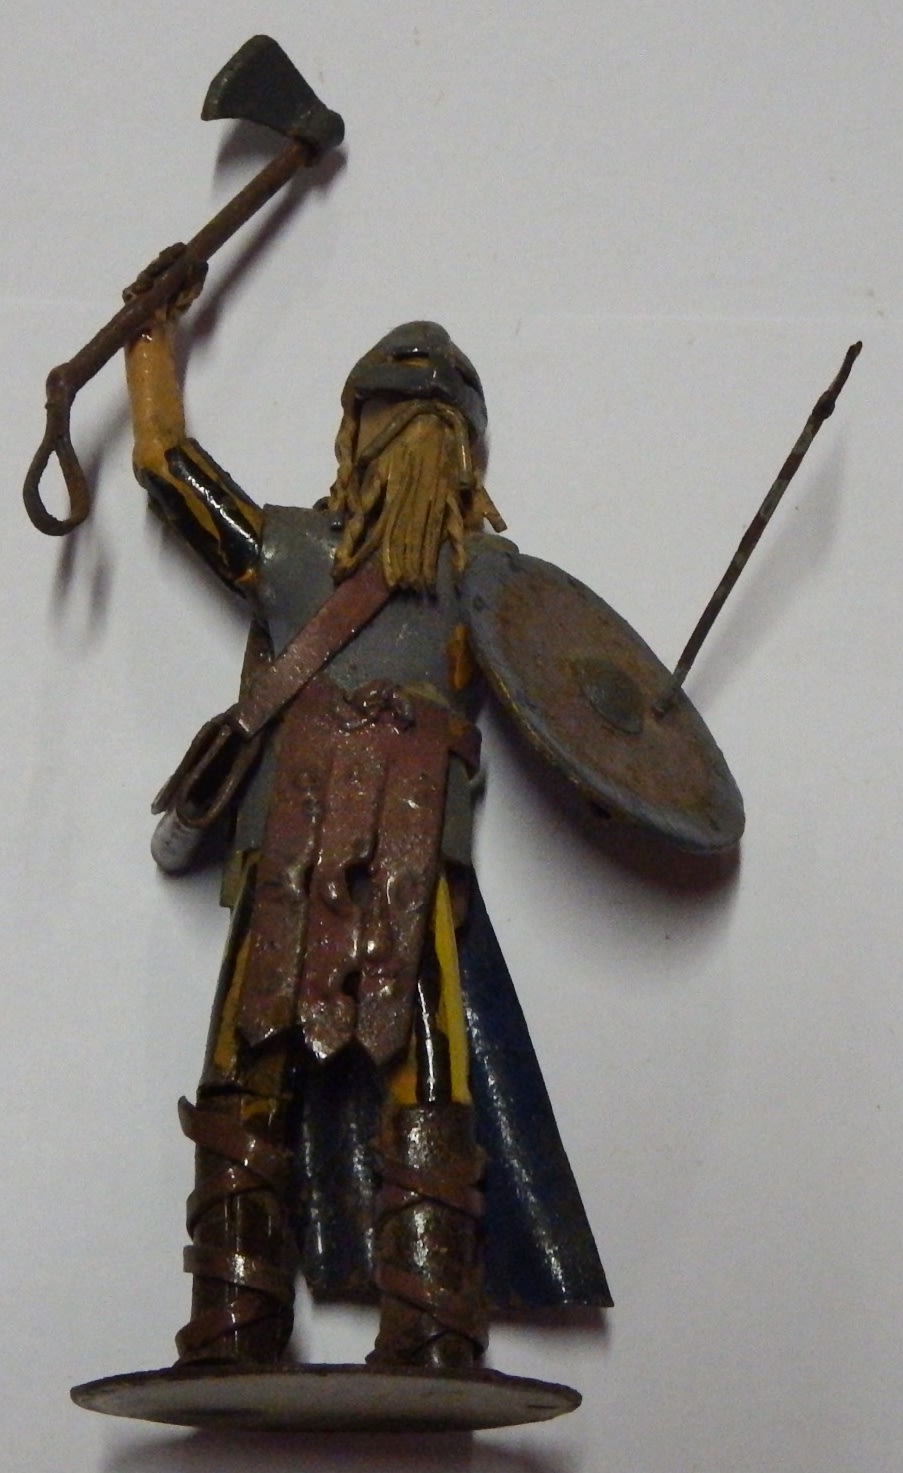 Small handmade metal Viking figurine - Very unique piece of art